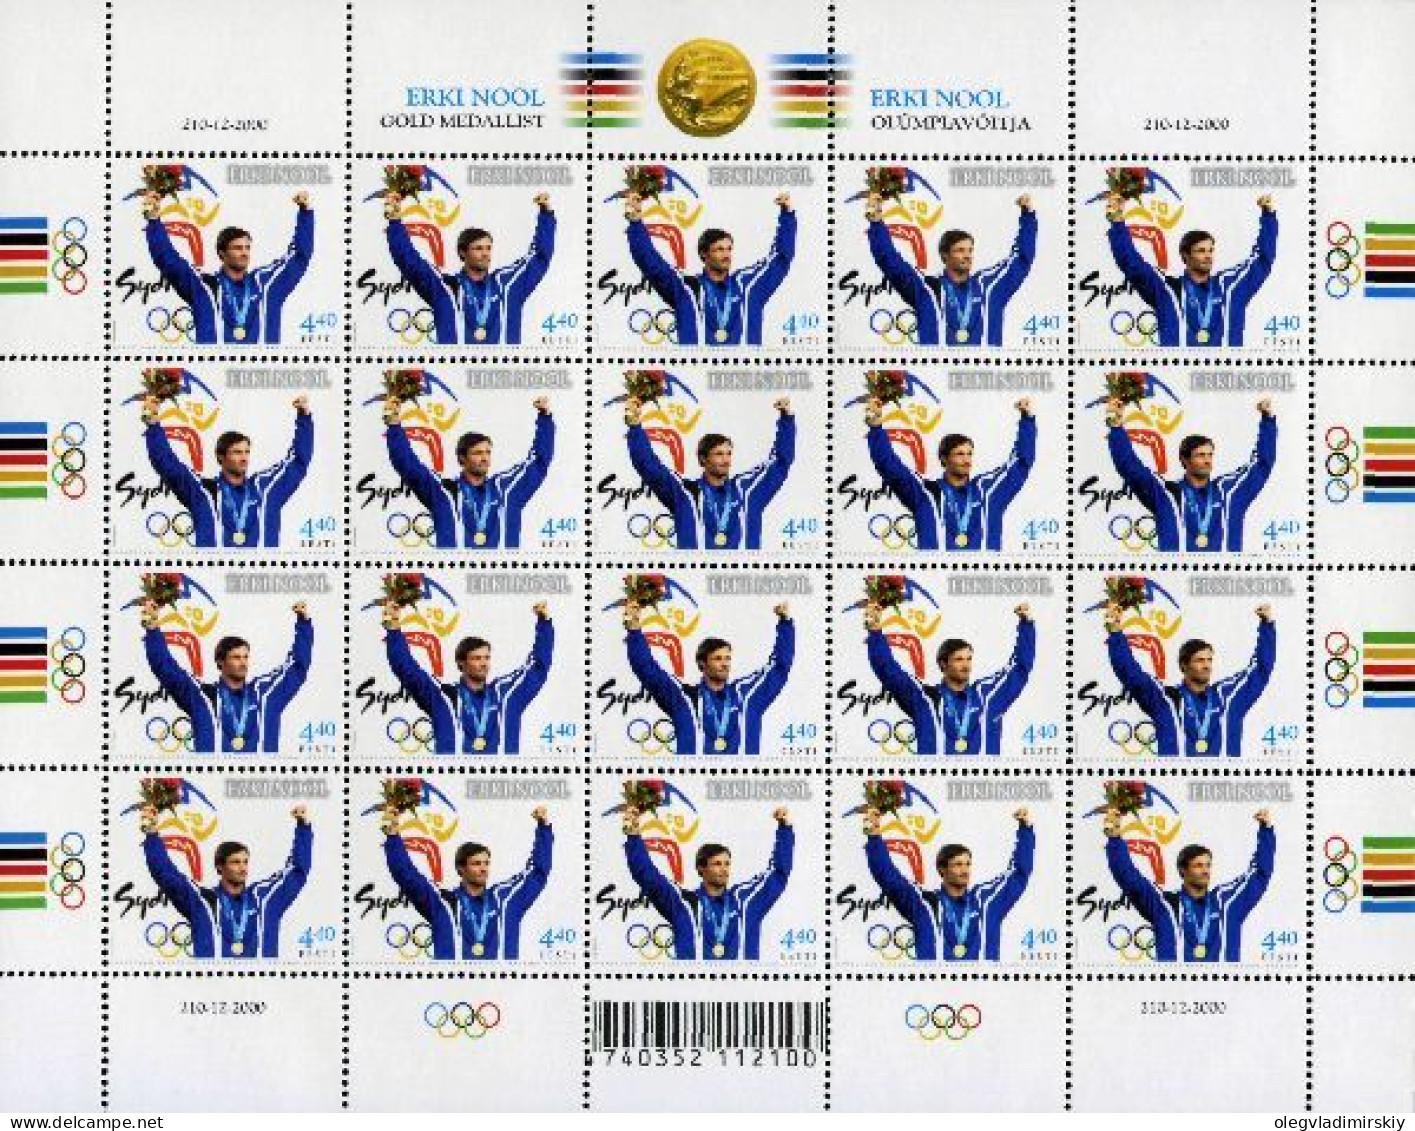 Estonia Estland Estonie 2001 Olympic Champion Erki Nool Sydney Summer Olympics Sheetlet MNH - Zomer 2000: Sydney - Paralympics